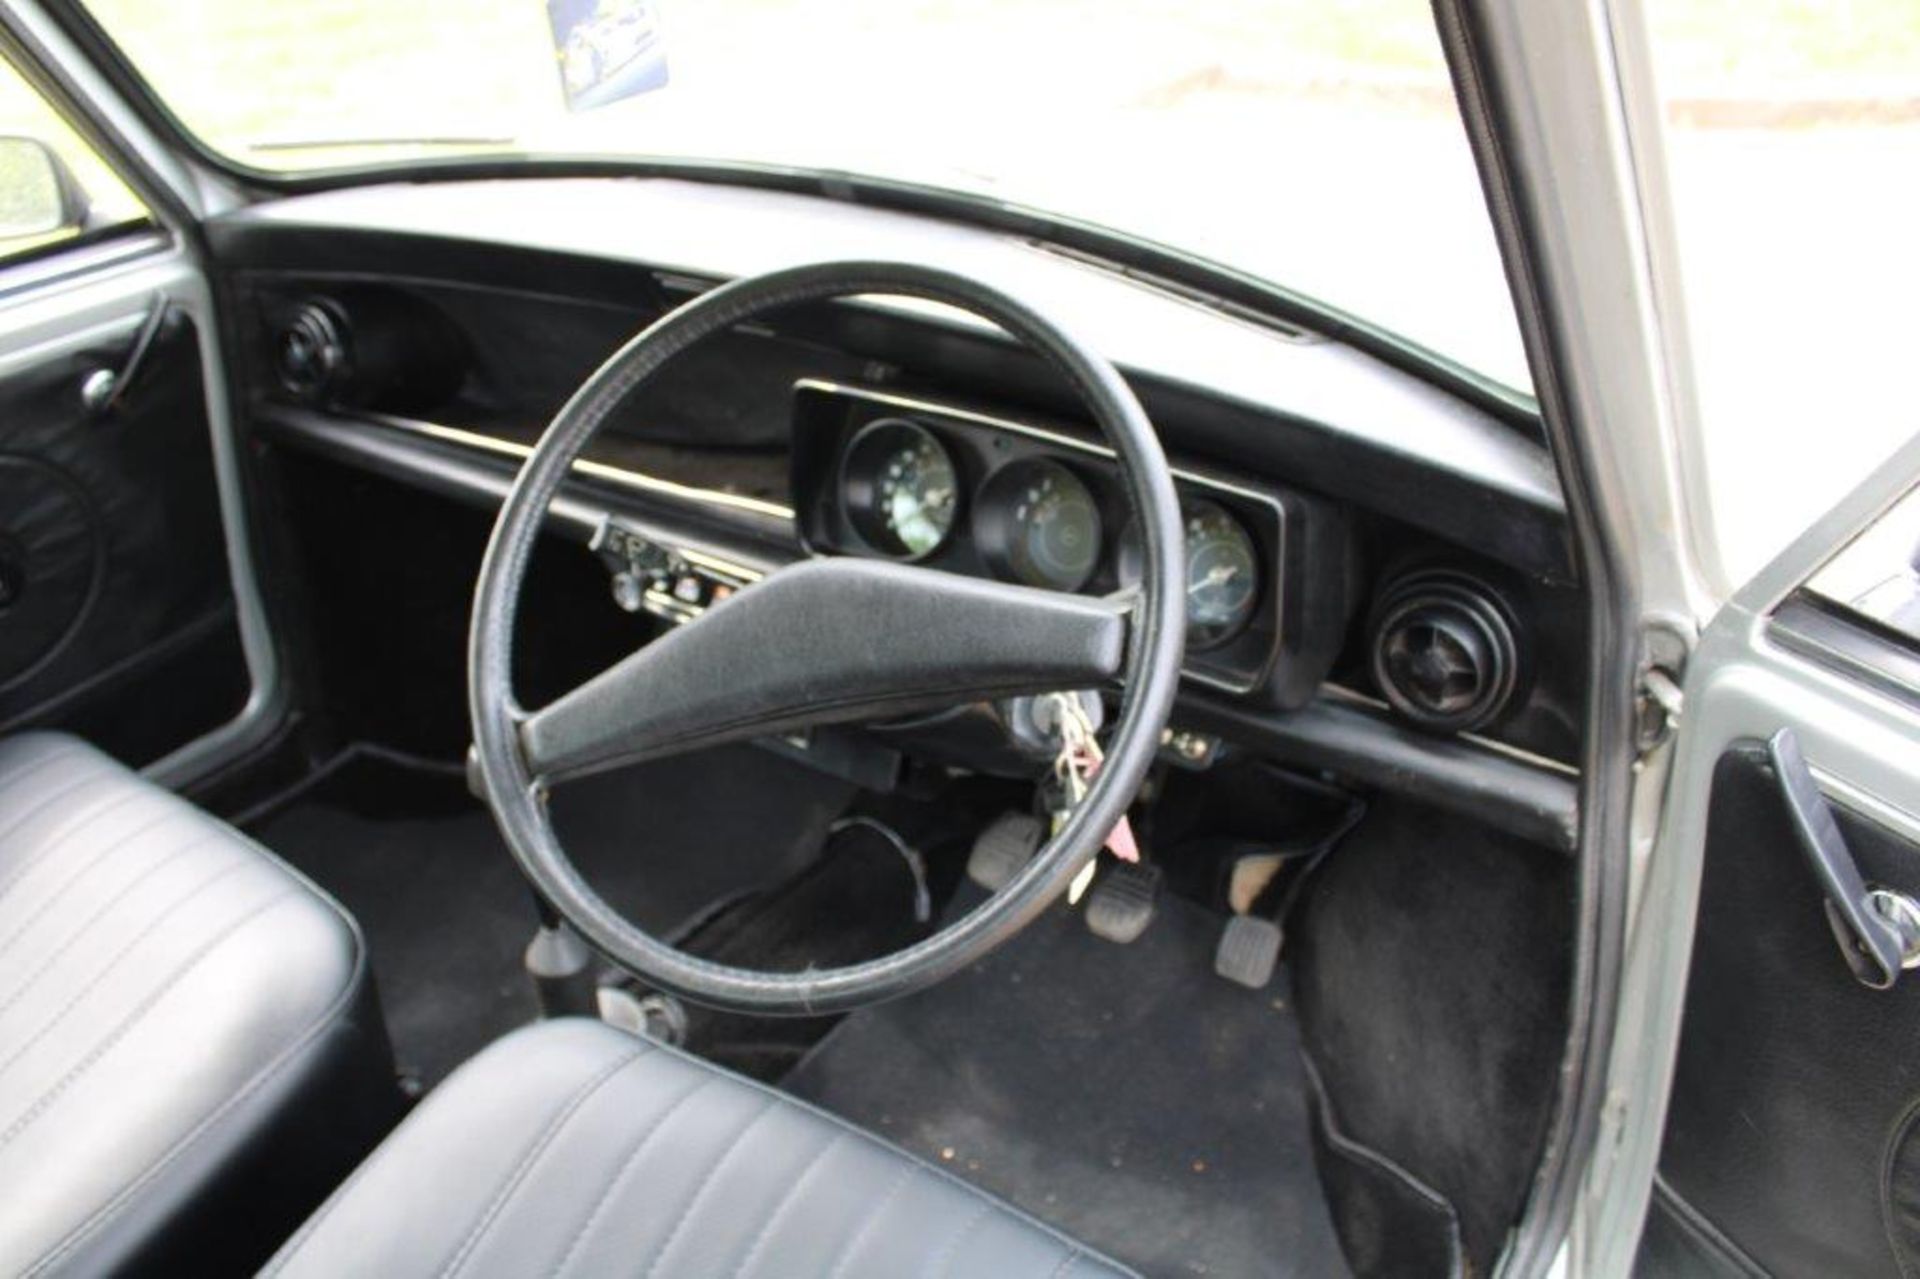 1980 Austin Morris Mini 1275 GT - Image 14 of 28